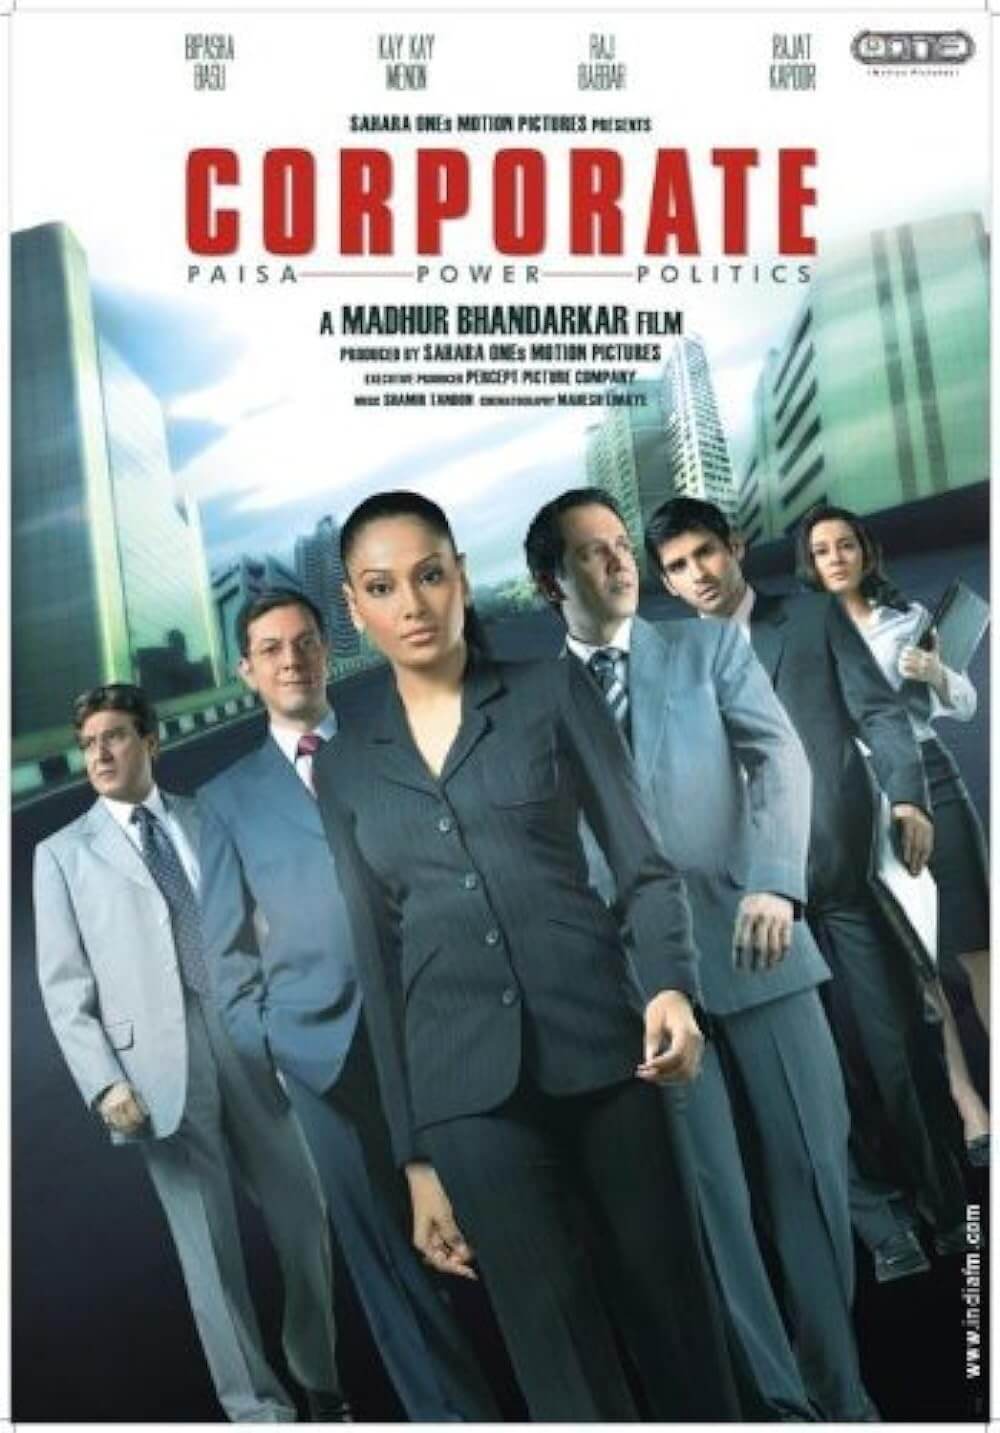 Corporate Movie Poster